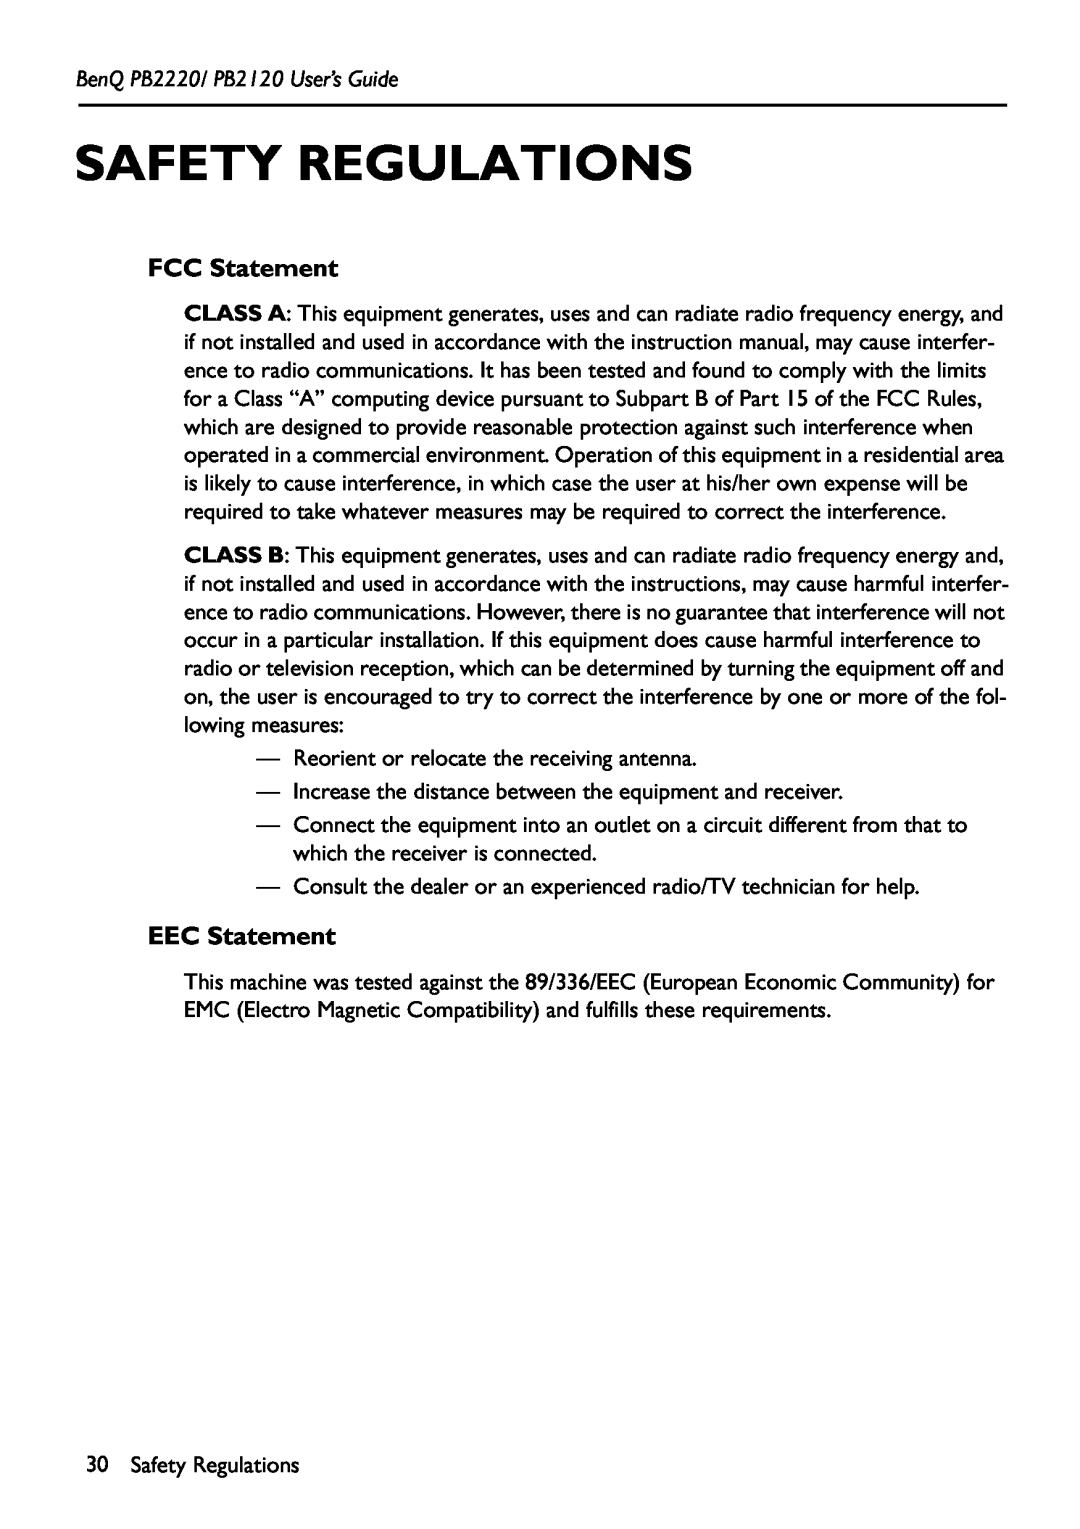 BenQ manual Safety Regulations, FCC Statement, EEC Statement, BenQ PB2220/ PB2120 User’s Guide 